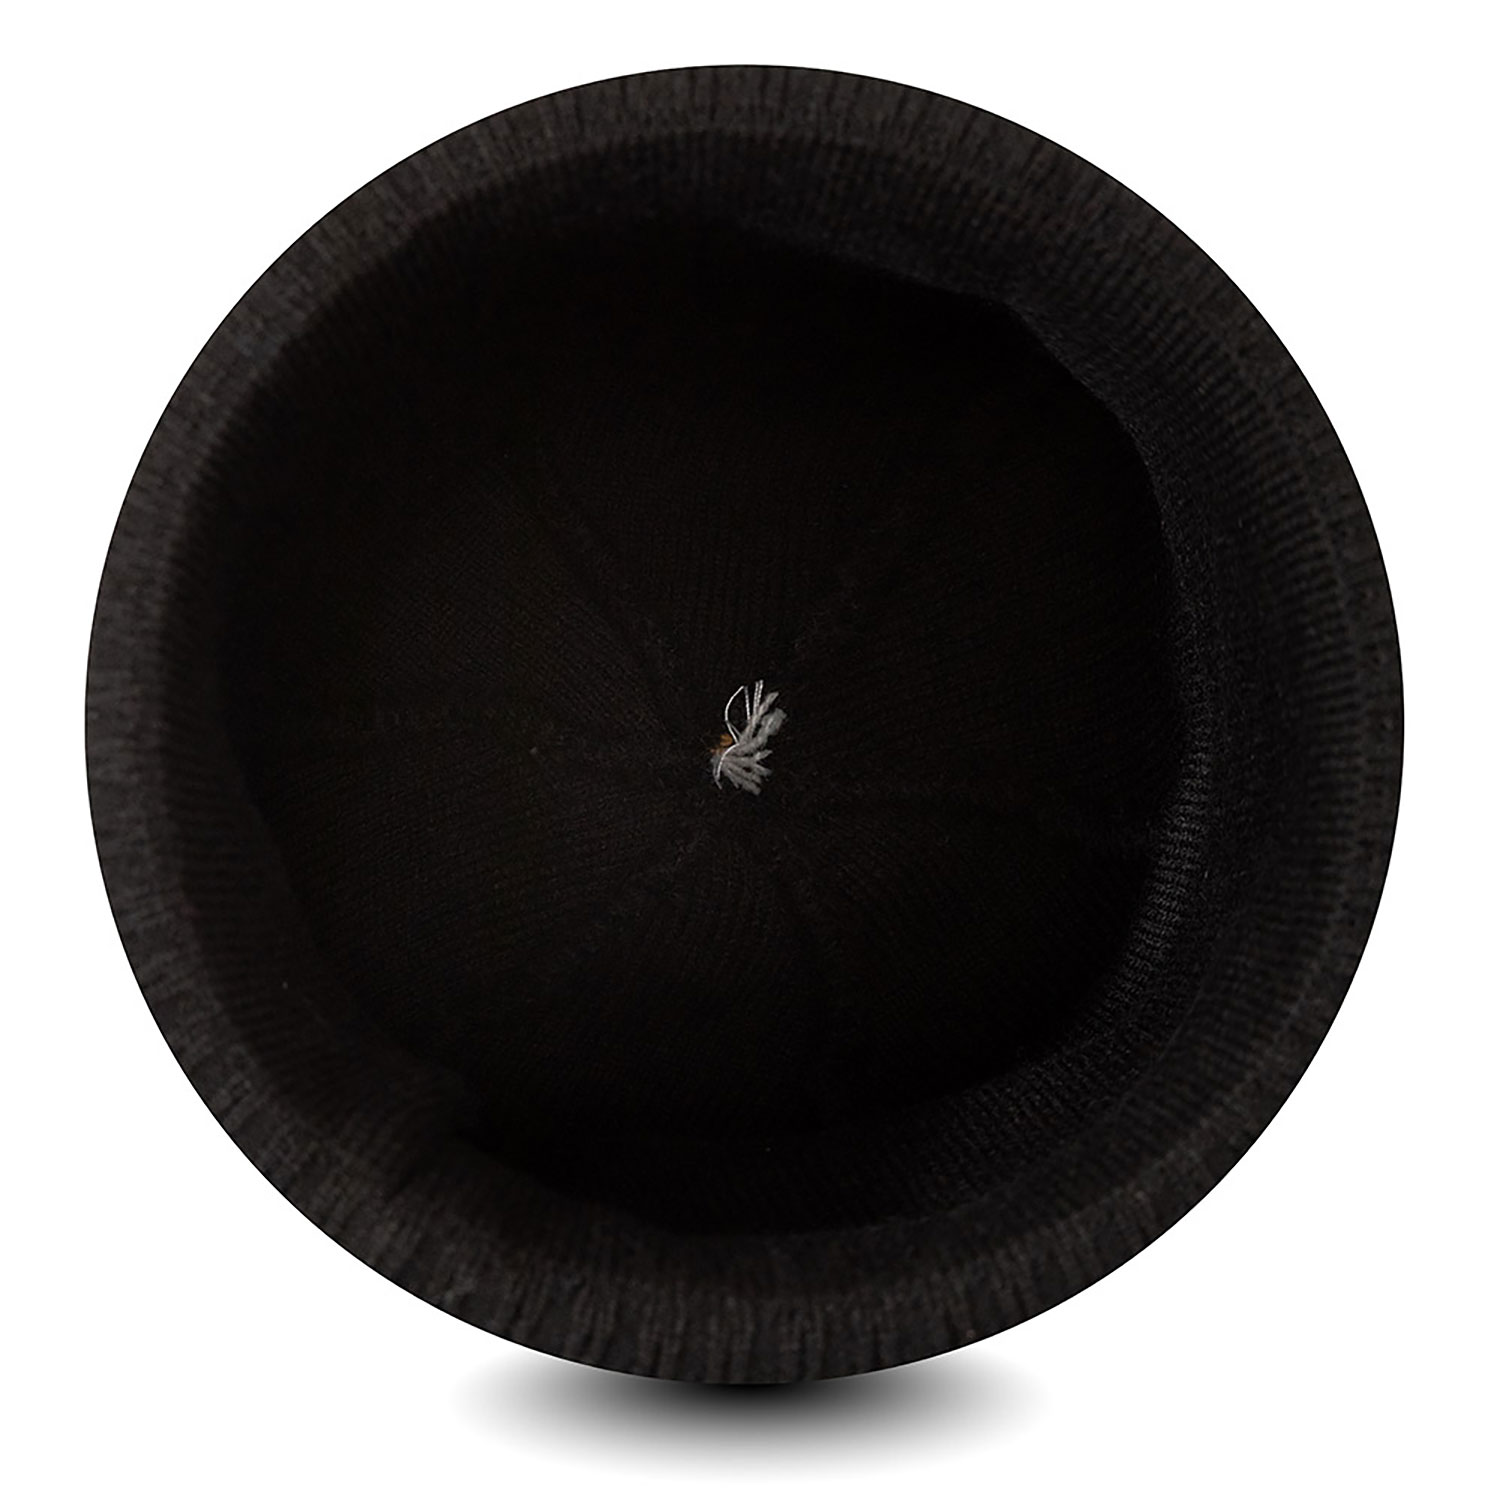 Stade Toulousain Black Bobble Knit Beanie Hat